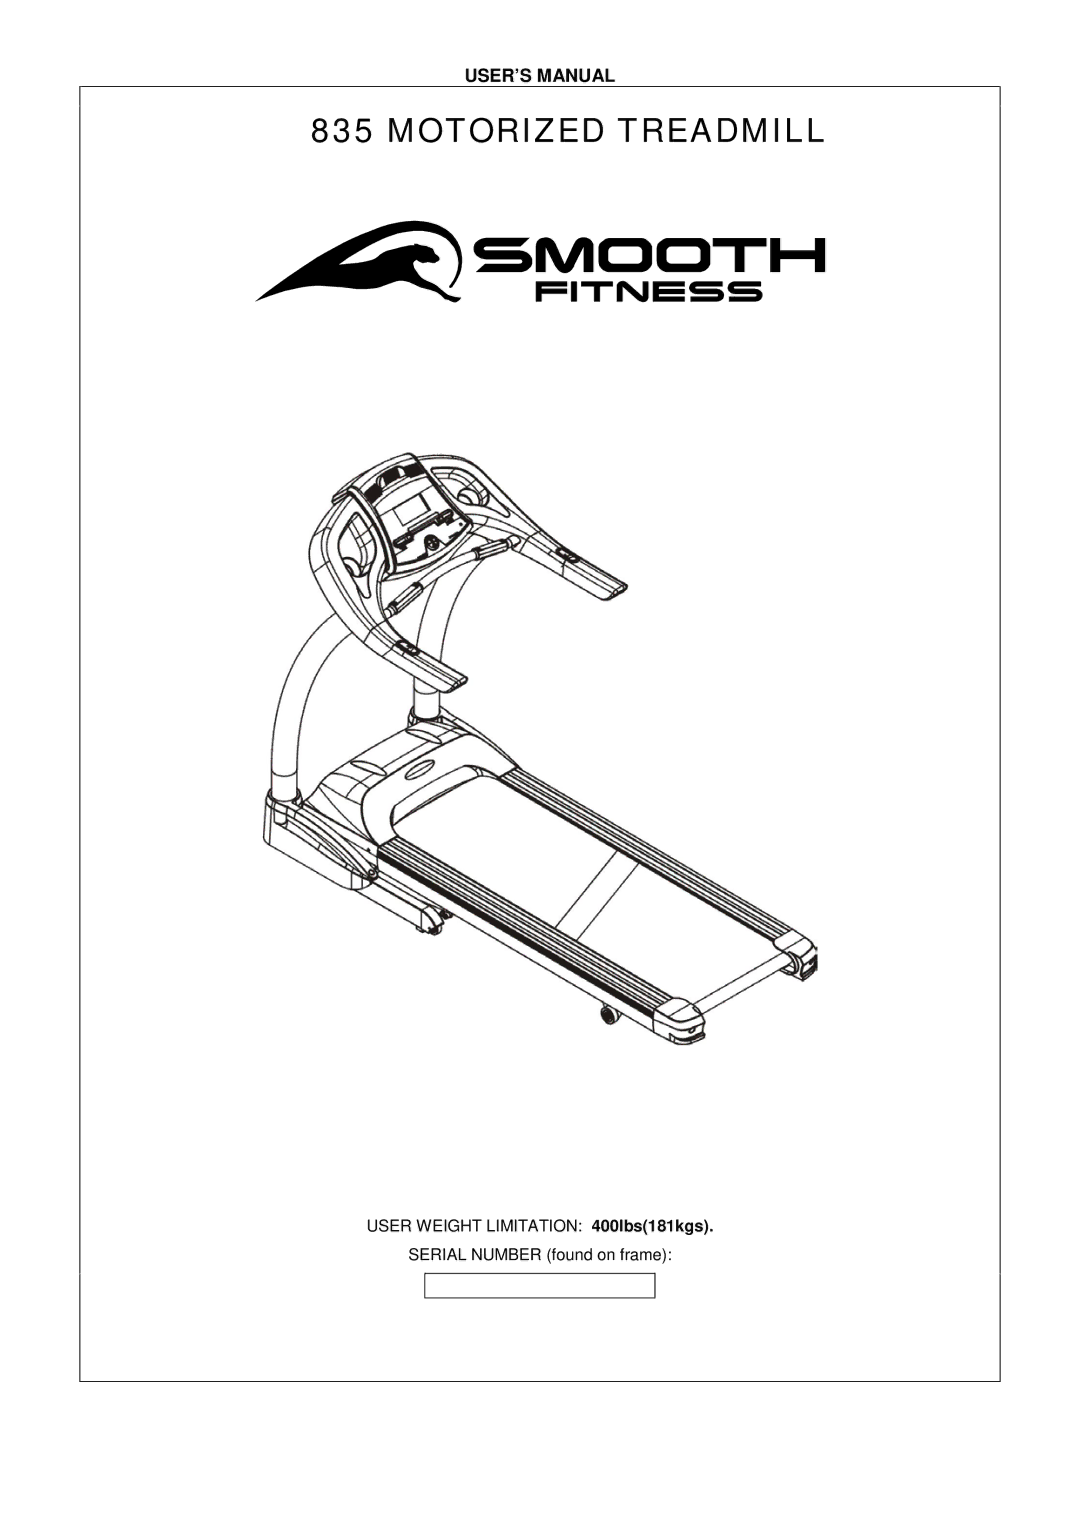 Smooth Fitness 835 user manual Motorized Treadmill 